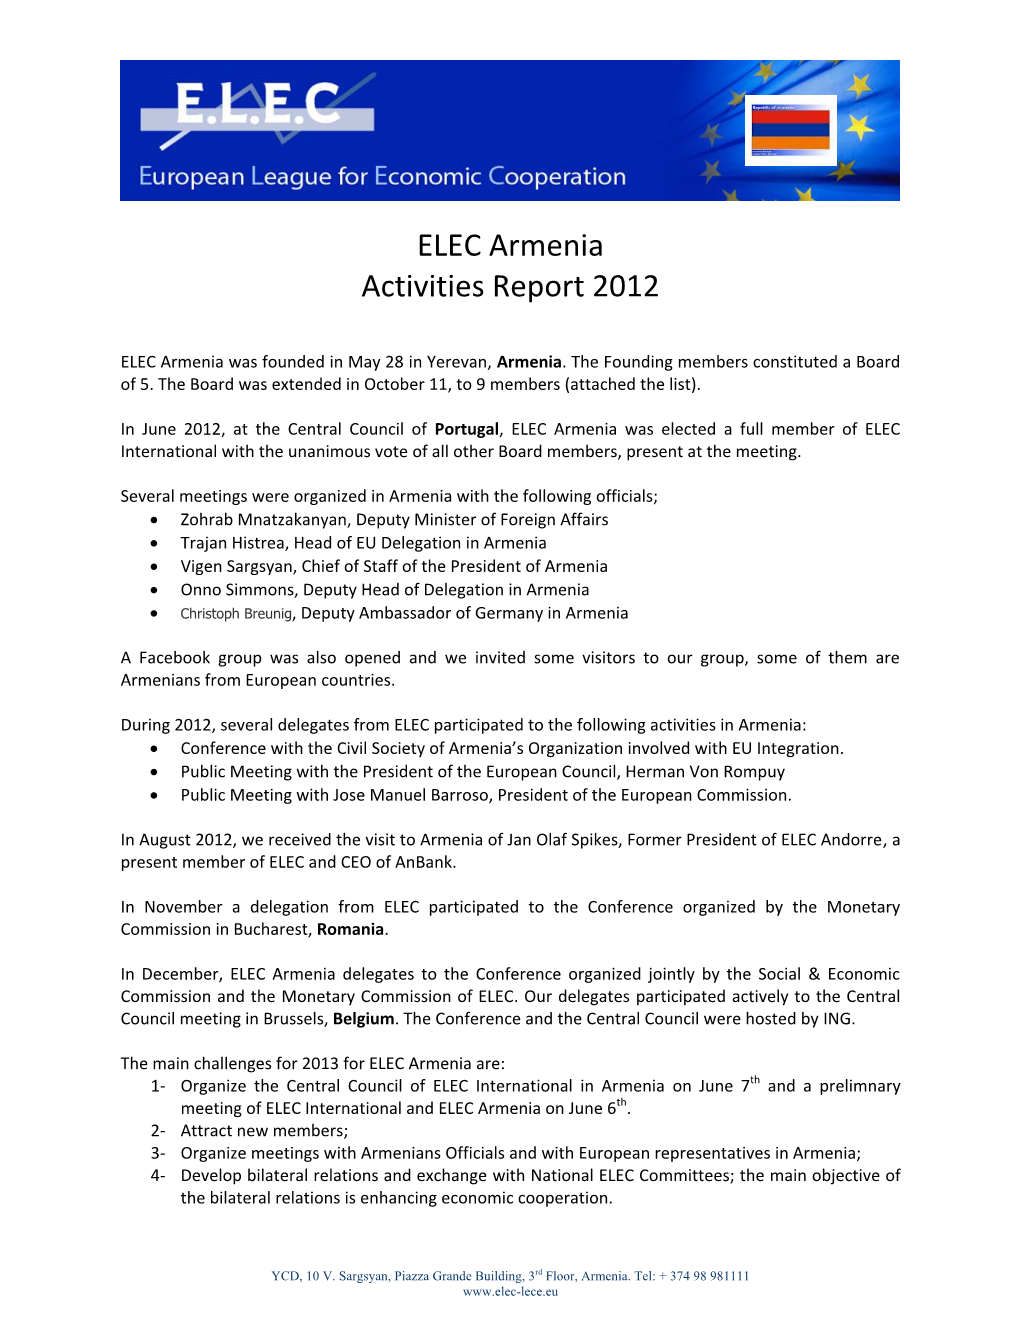 ELEC Armenia Activities Report 2012